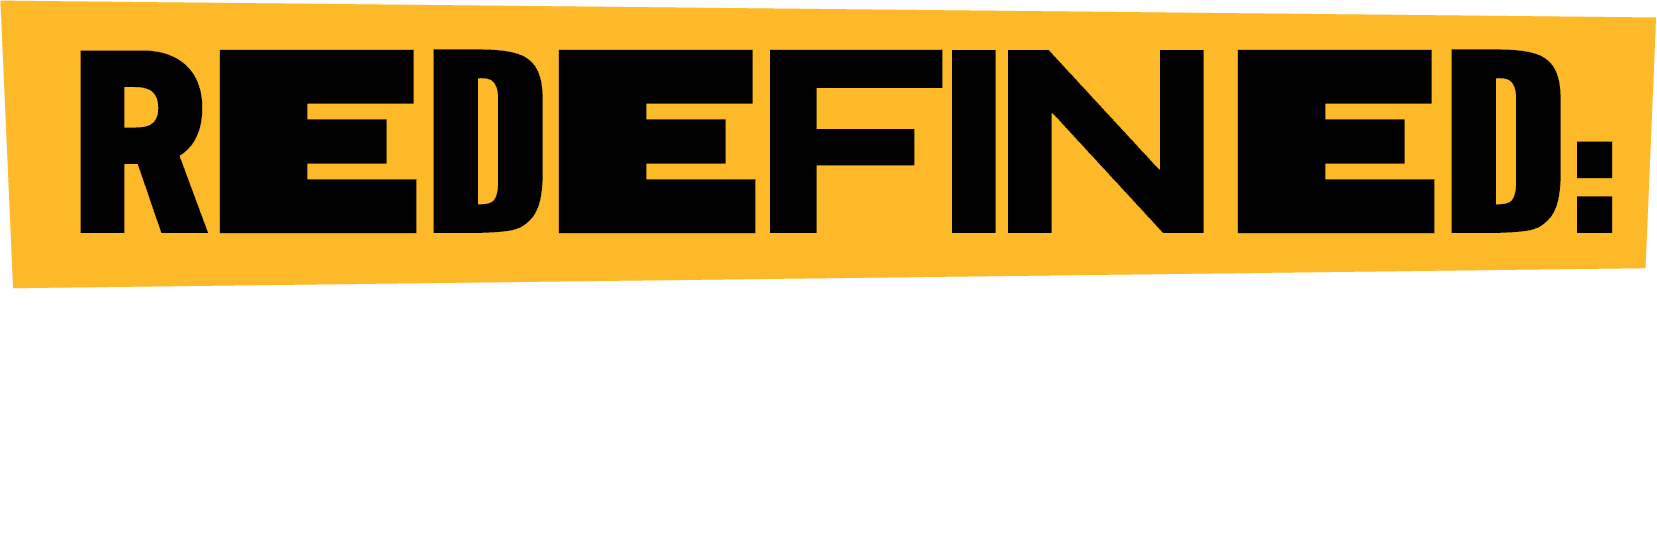 Redefined: J.R. Smith logo